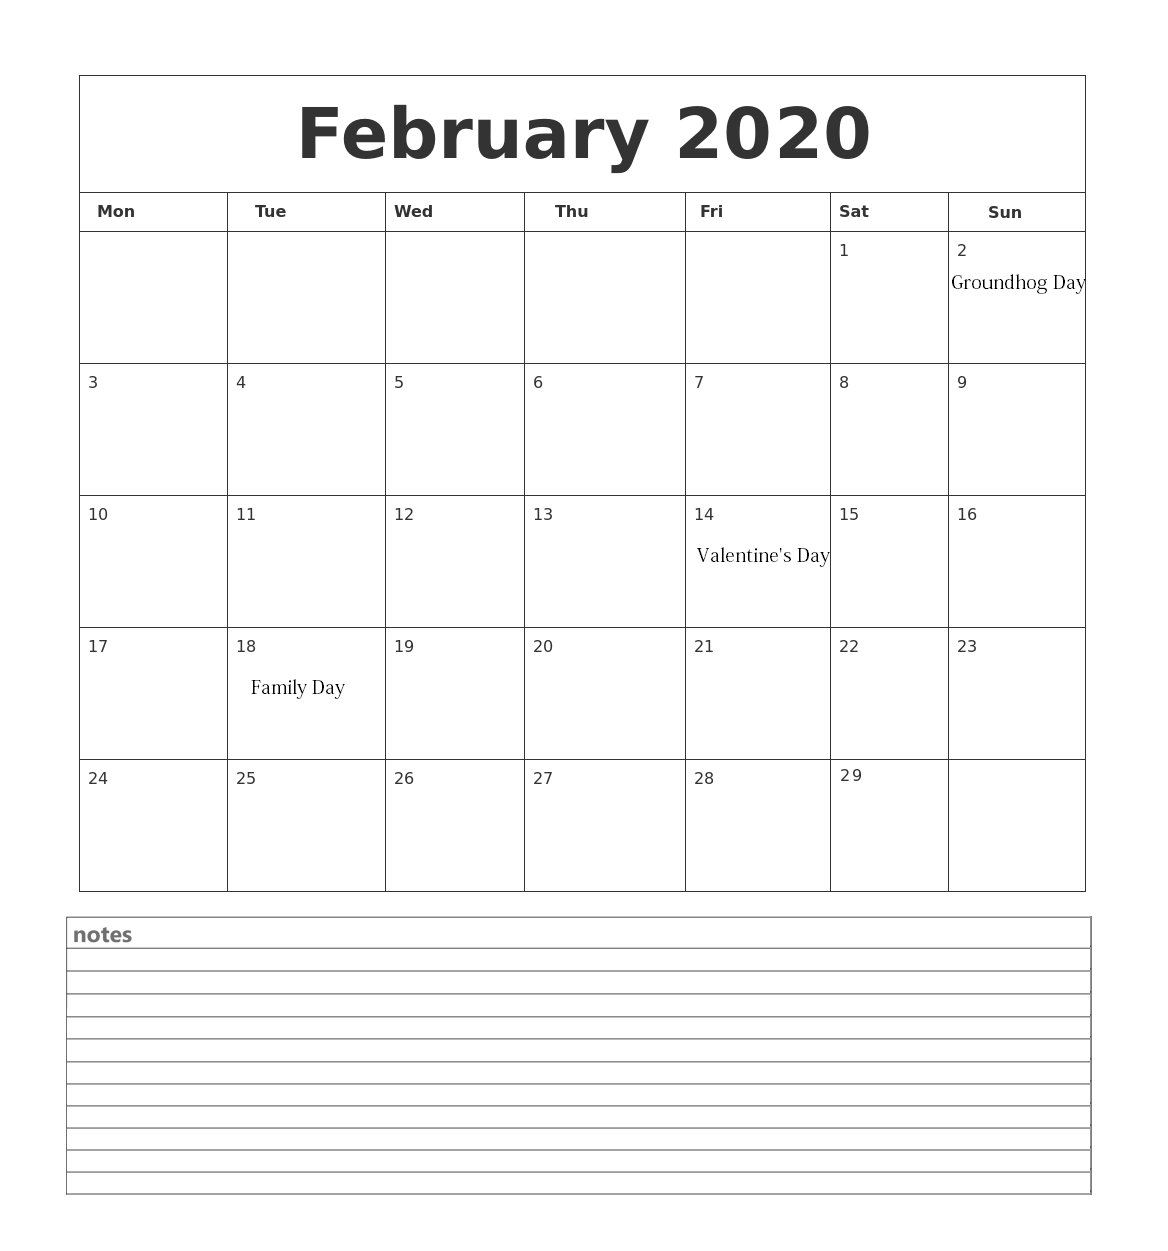 Customized February 2020 Calendar